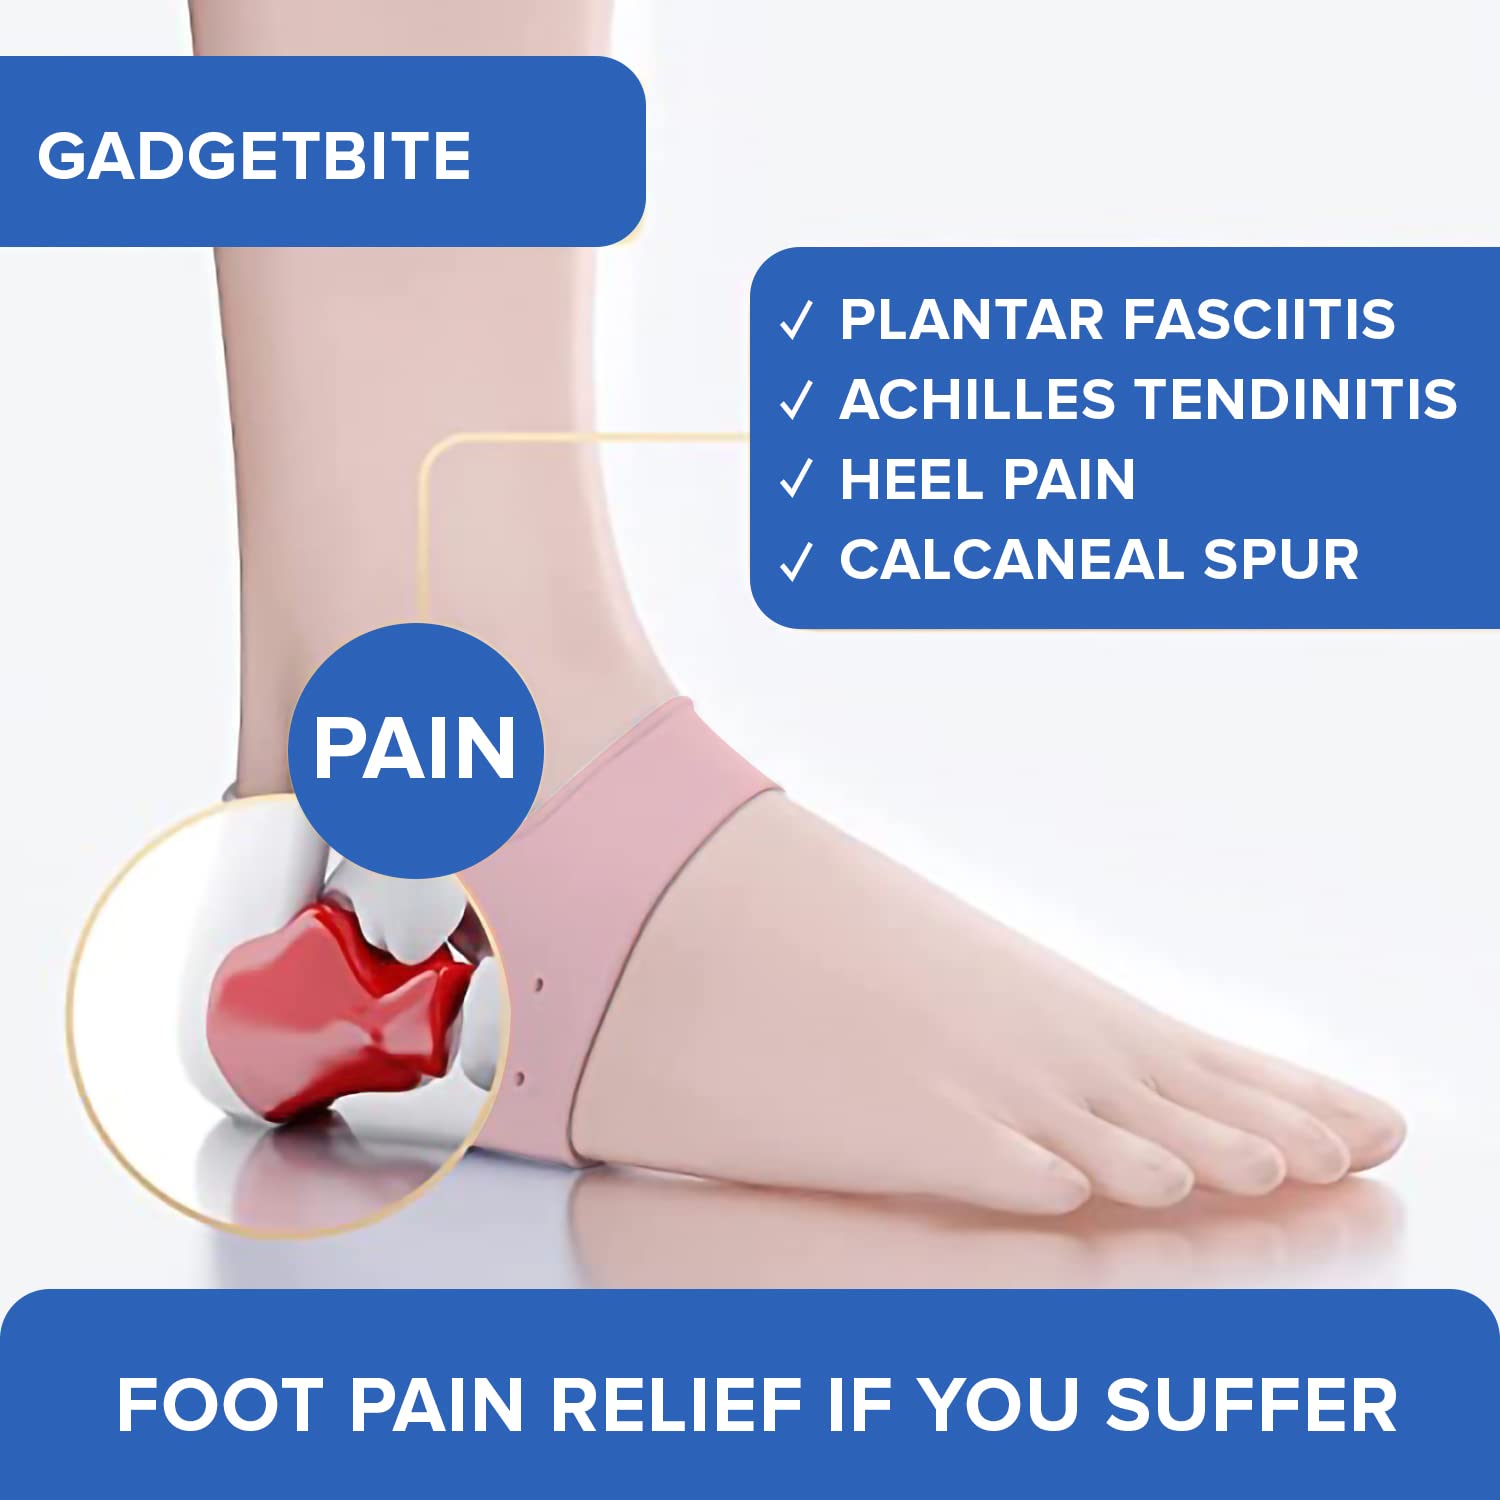 Dr Foot Anti Crack Silicone Gel Heel Pad Socks | For Heel Swelling Pain Relief, Dry Hard, Cracked Heels Repair Cream Foot Care | For Both Men & Women | Half-length - 1 Pair (Free Size) (Pack of 3)